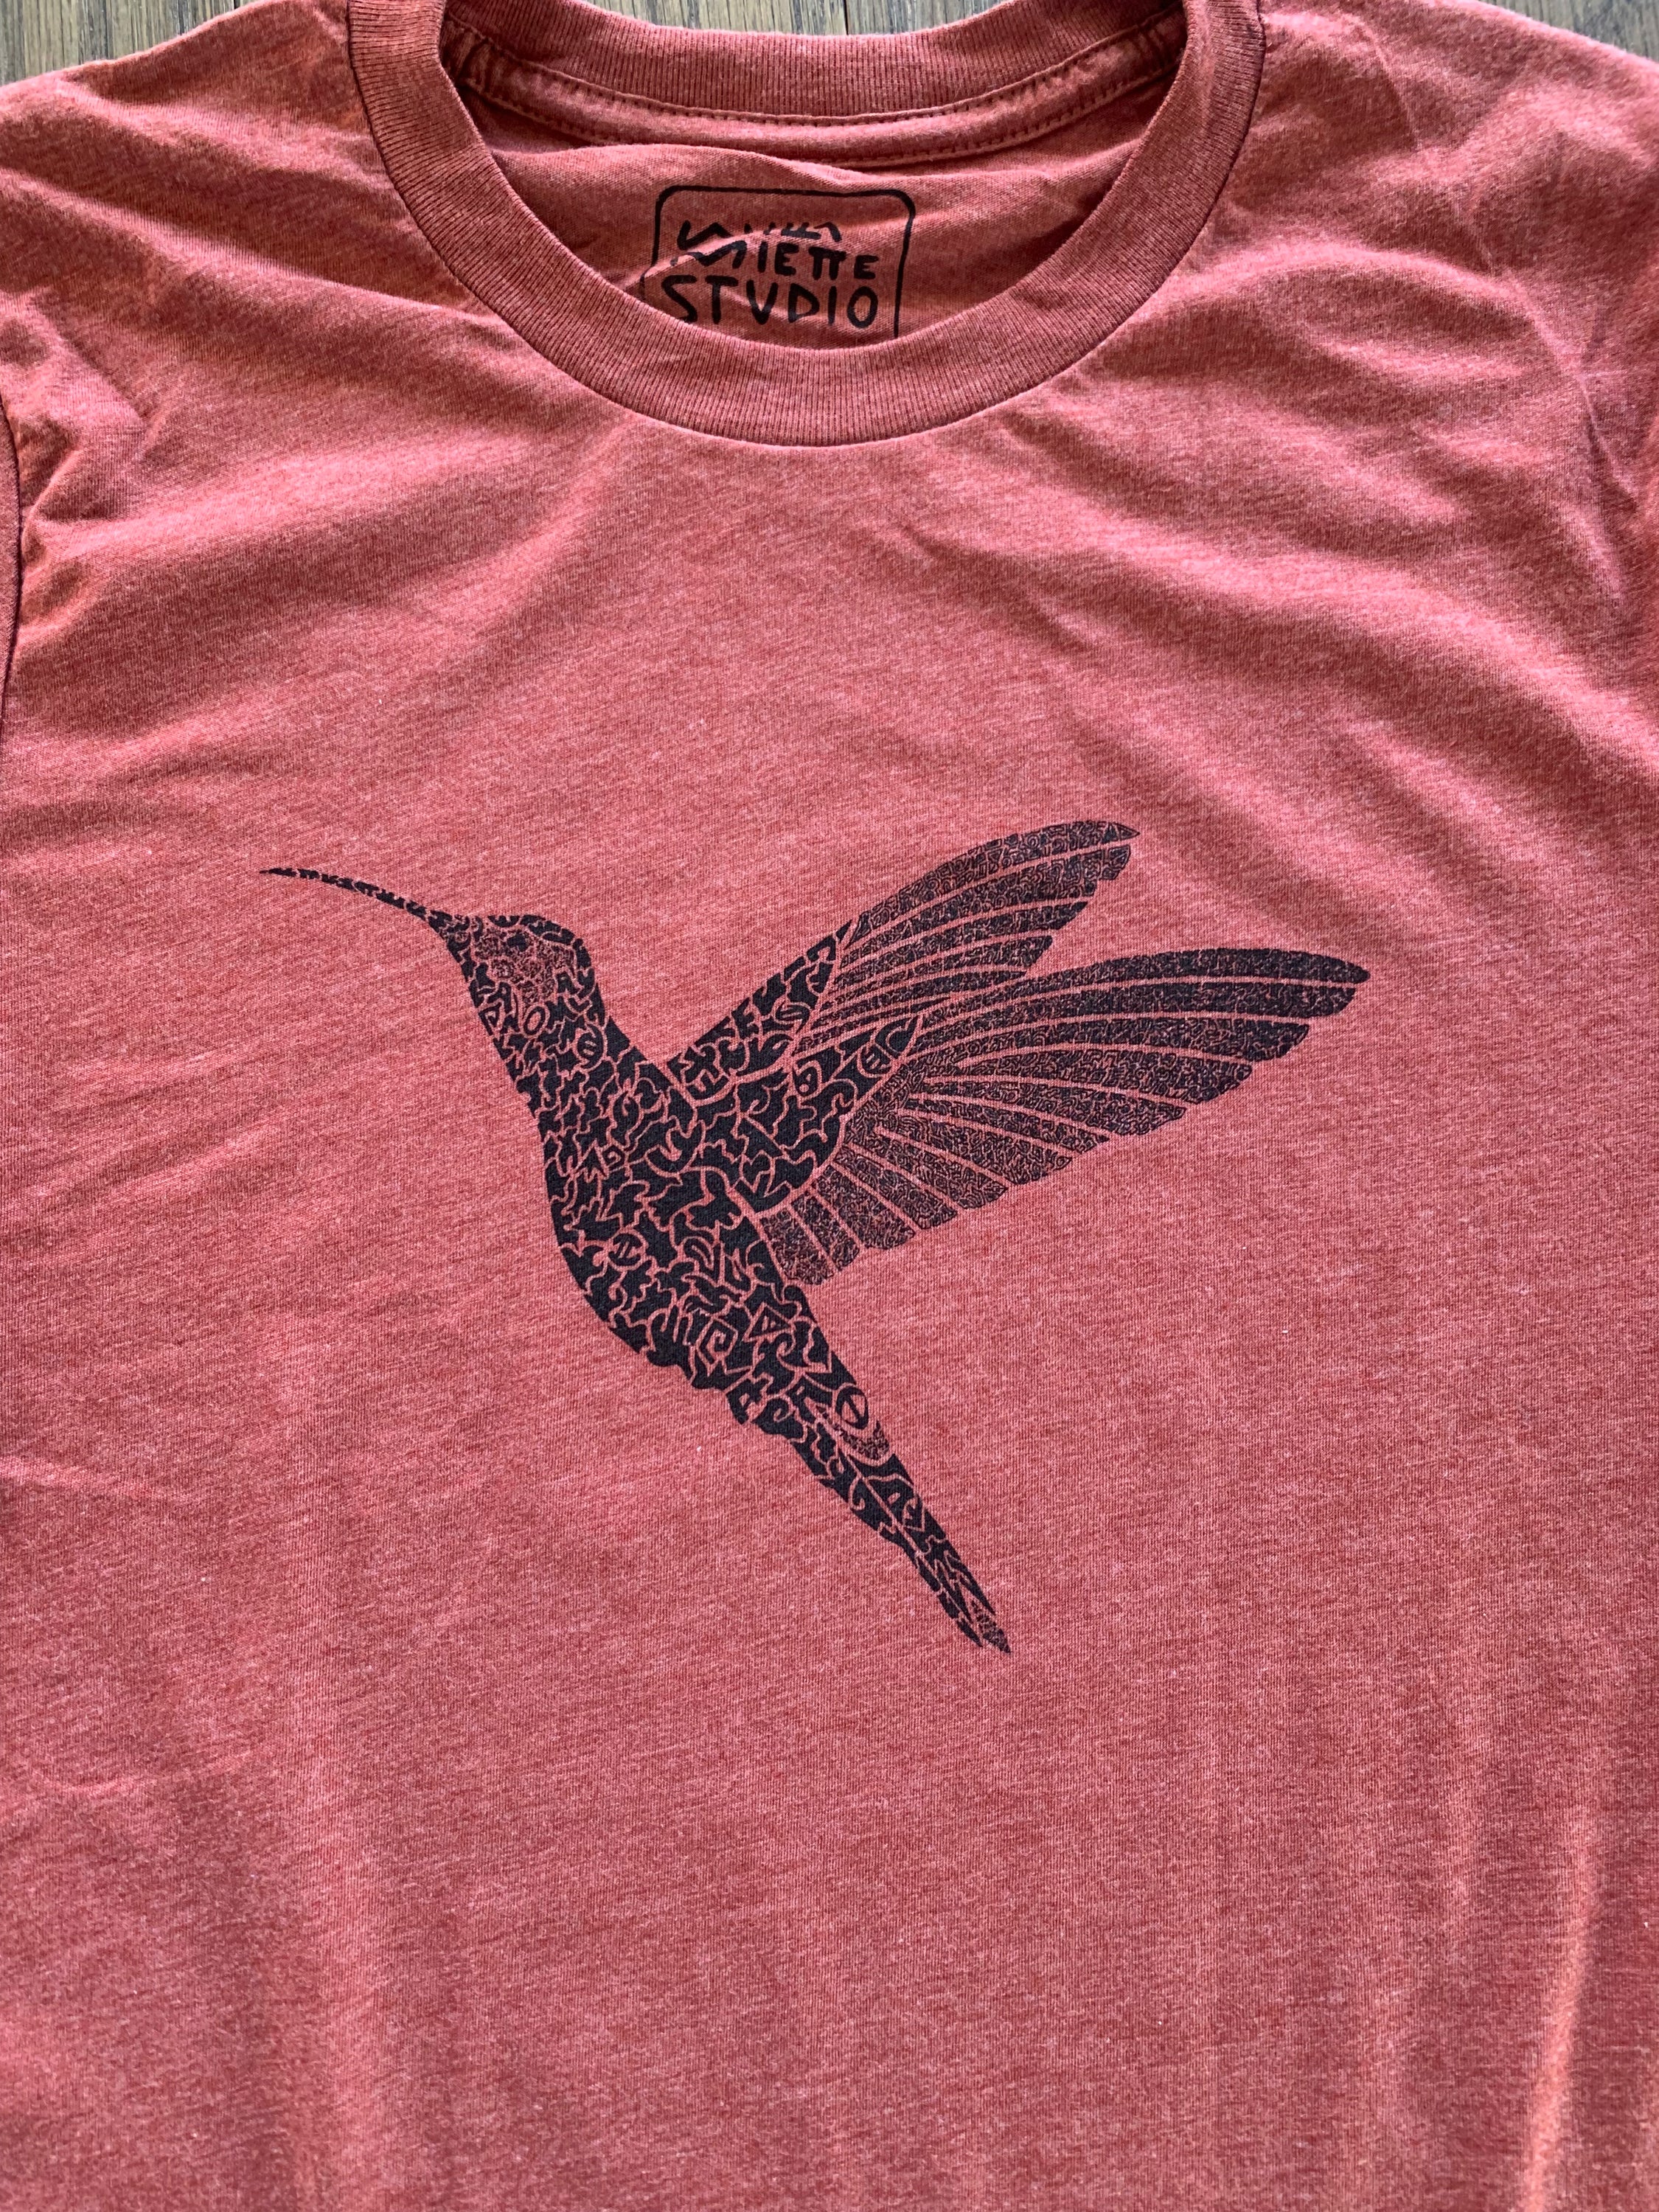 Men's hummingbird T-shirt